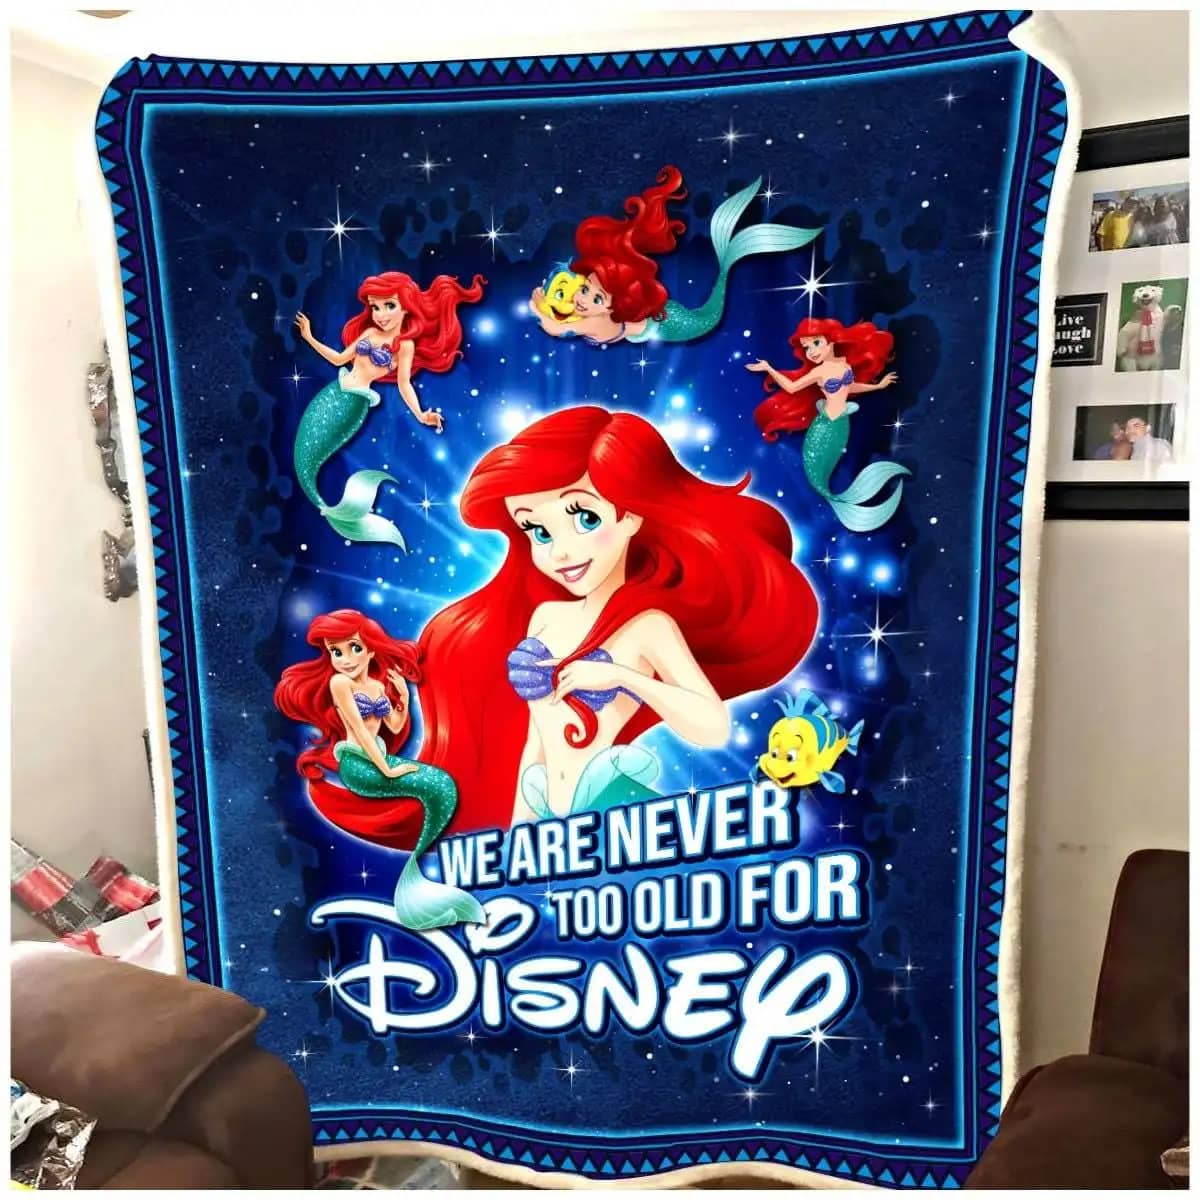 Never Too Old Ariel Princess Disney Inspired Soft Cozy Comfy Bedroom Livingroom Office Home Decoration Fleece Blanket